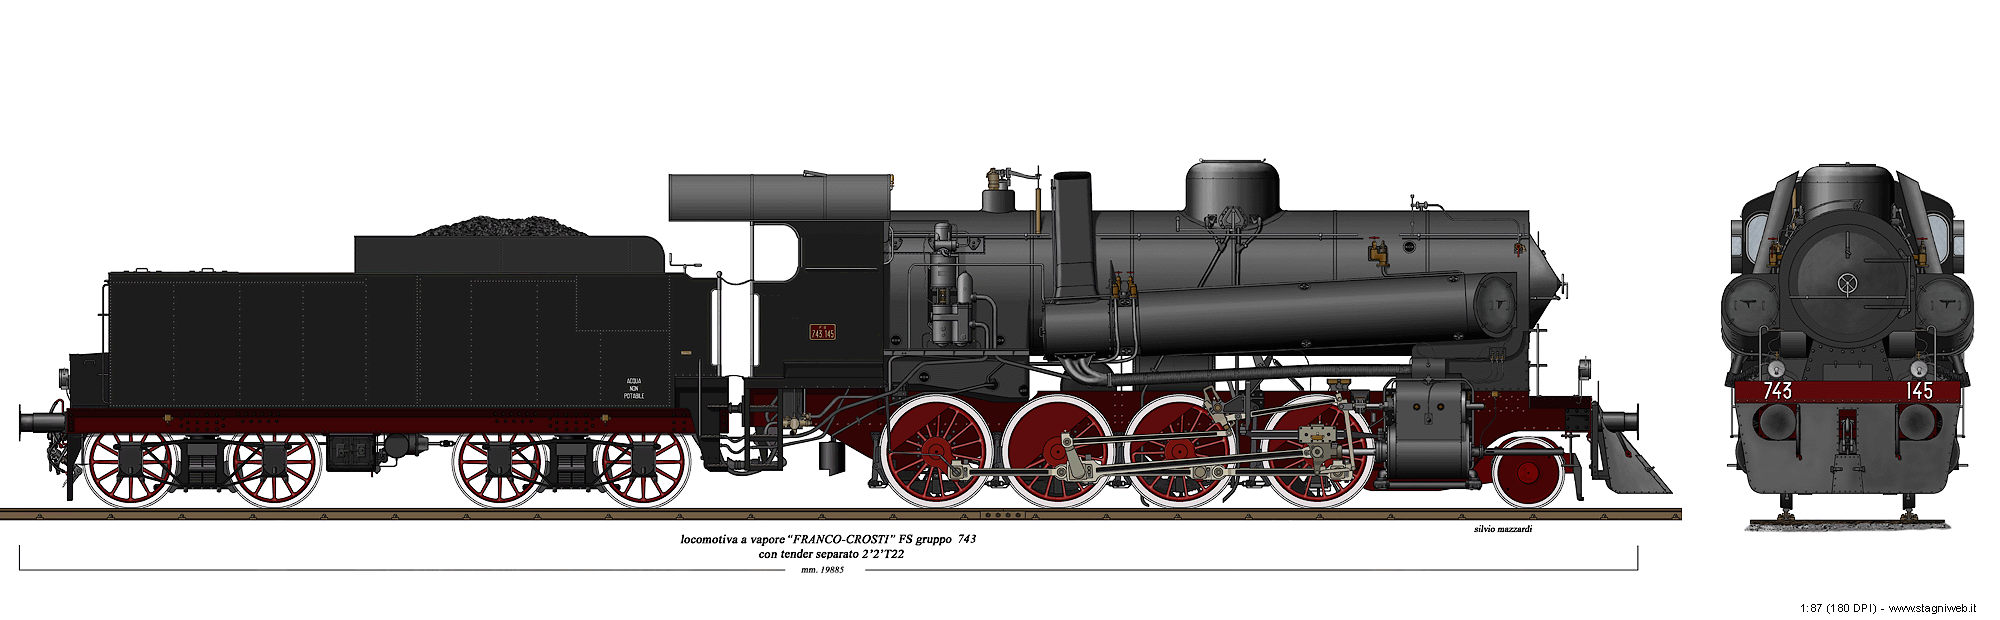 Locomotive a vapore - Gr. 743 Franco-Crosti